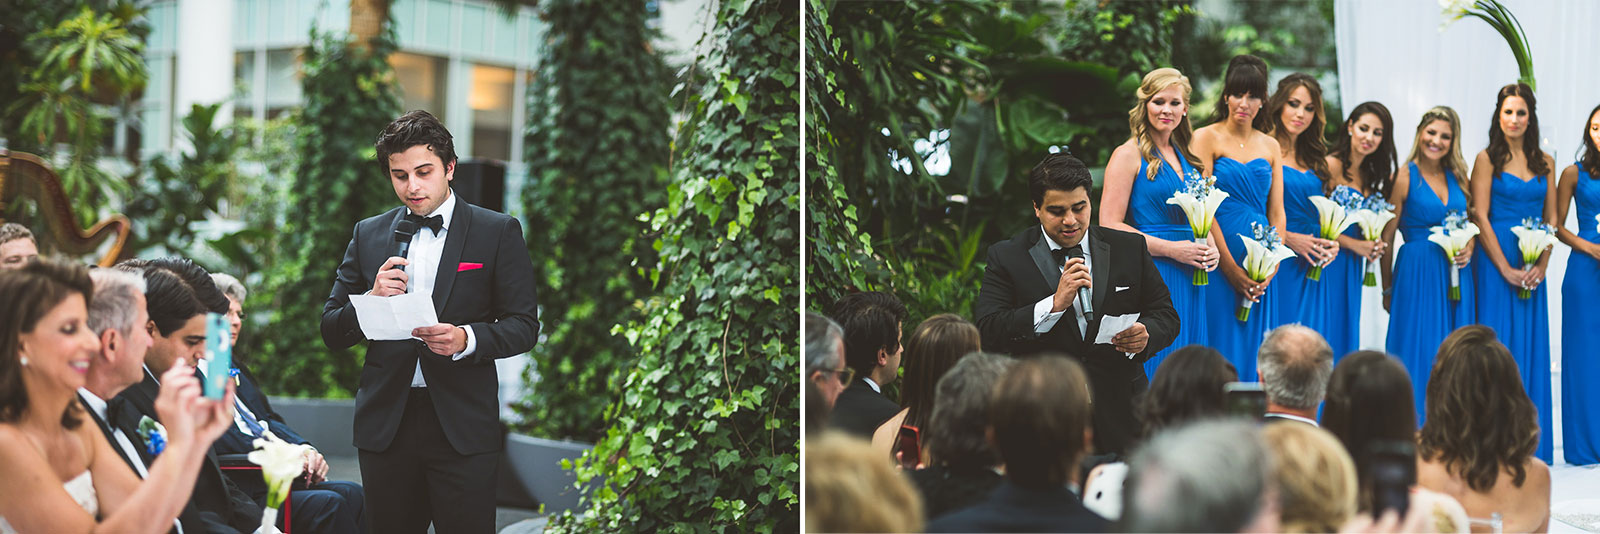 52 speech at ceremony - Marisa + Chris // Chicago Wedding Photos at Navy Pier Crystal Garden